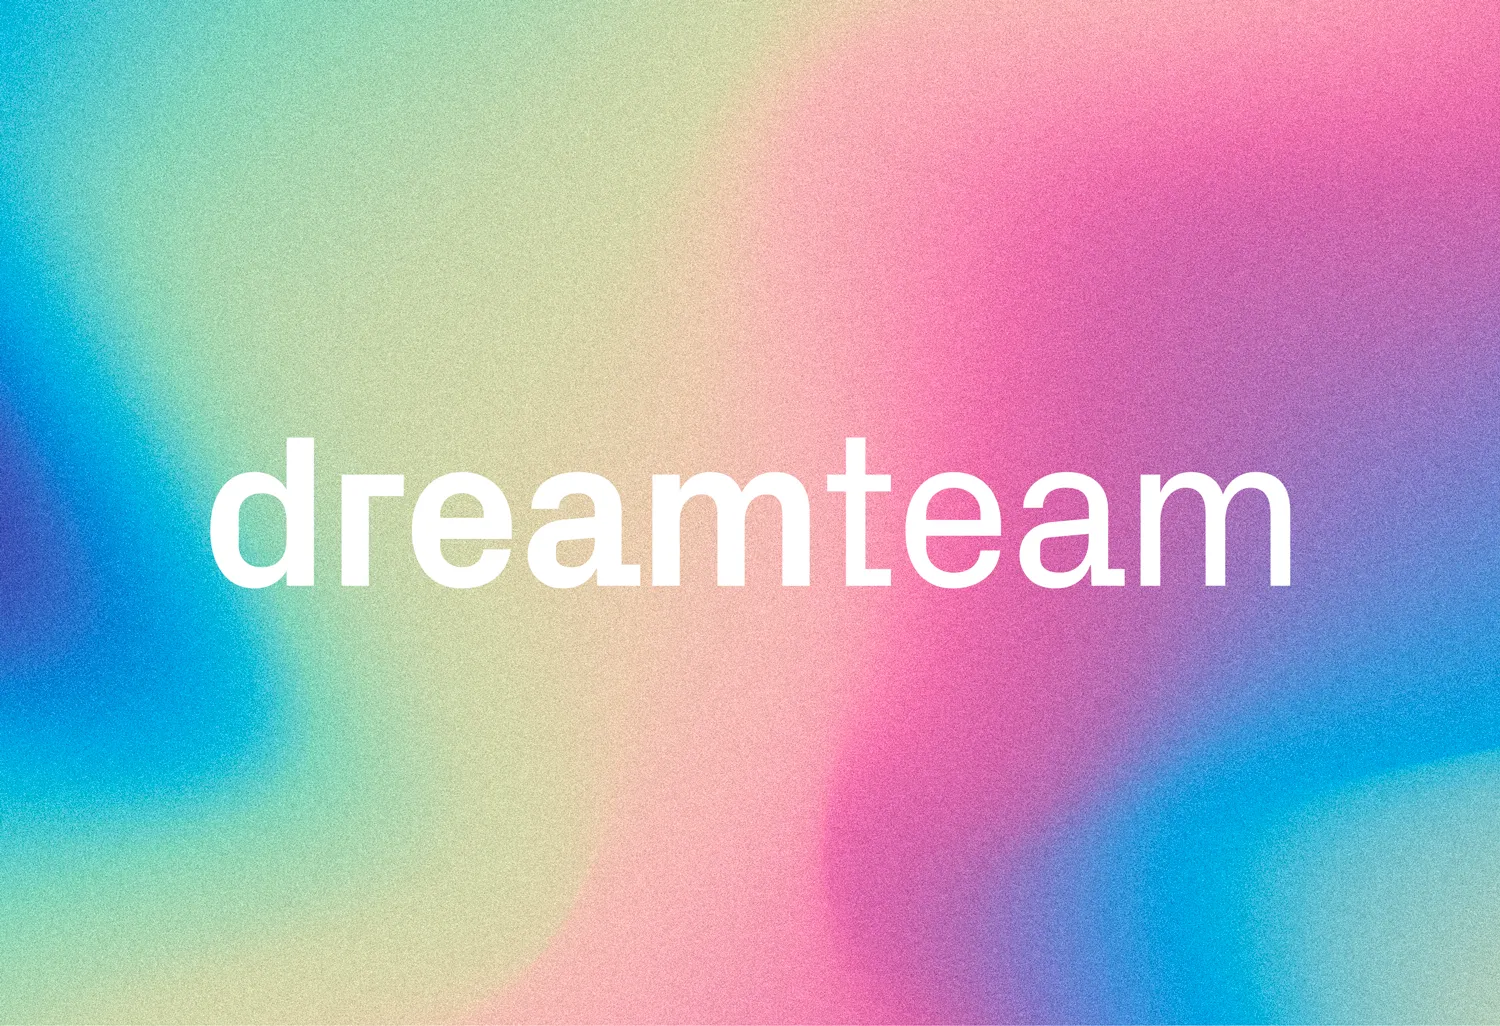 Dreamteam design